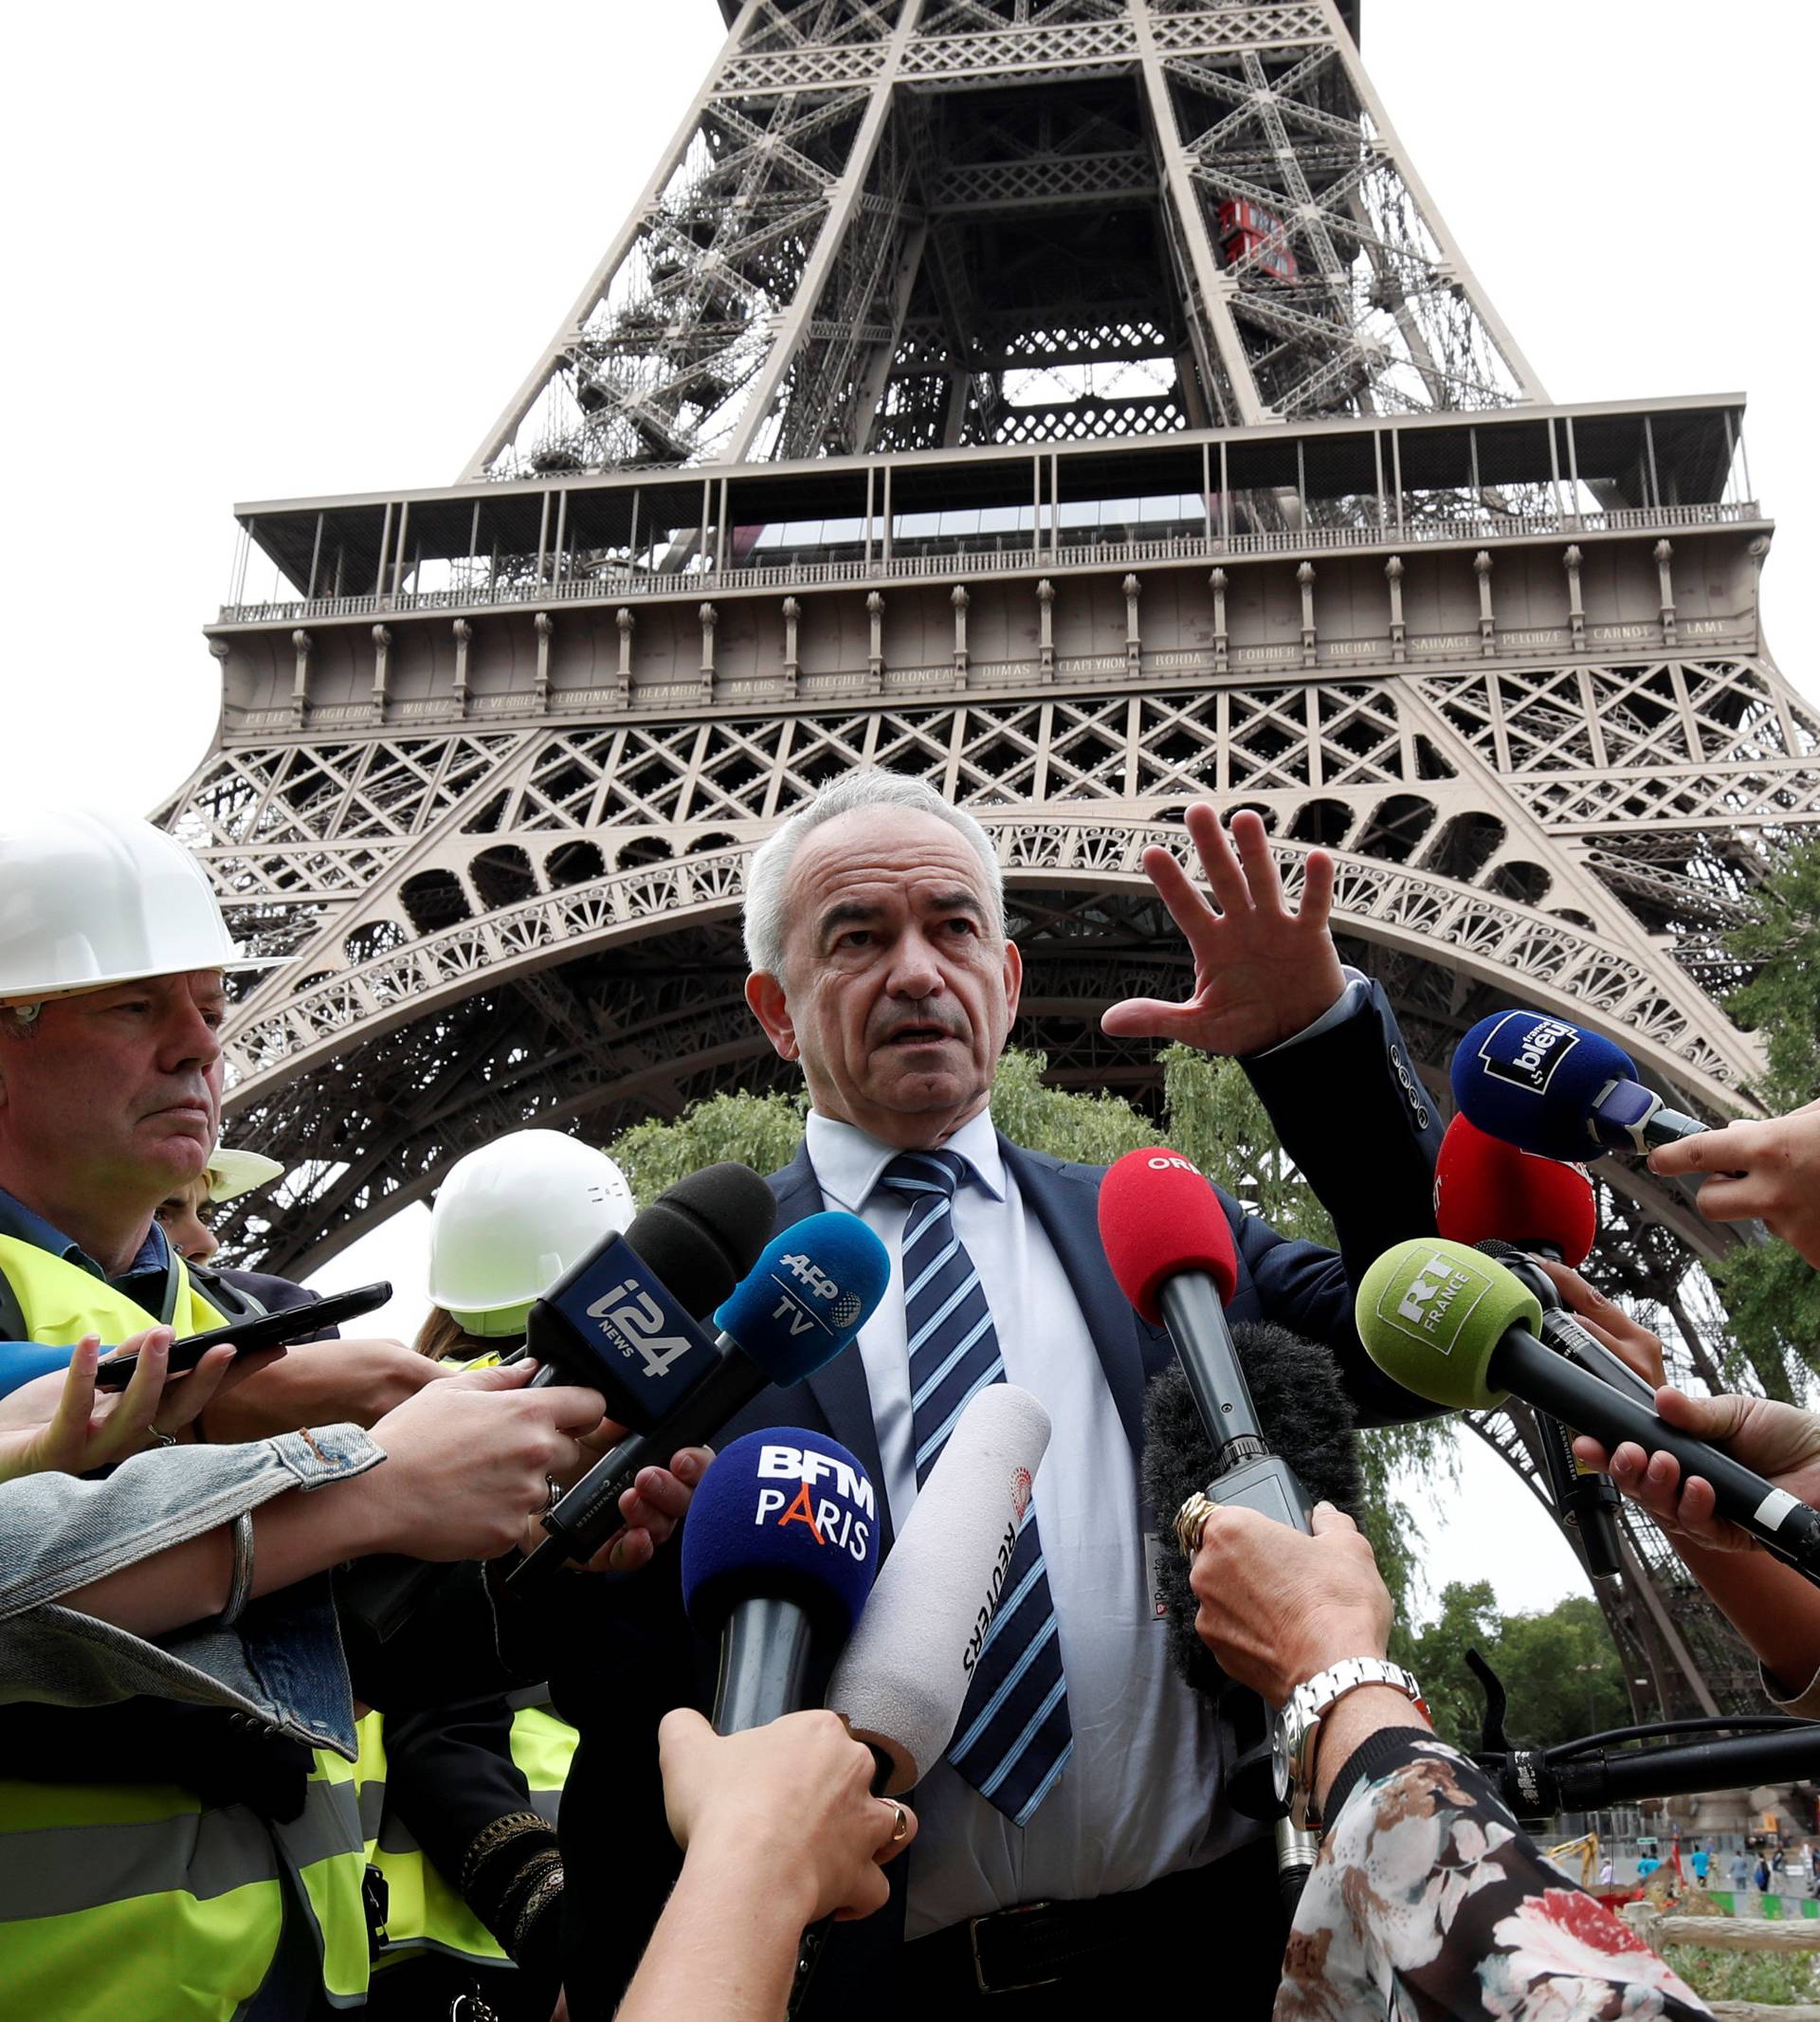 Bernard Gaudillere, President of the The Societe d'Exploitation de la Tour Eiffel (SETE) spekas to members of the media in front of the Eiffel Tower in Paris